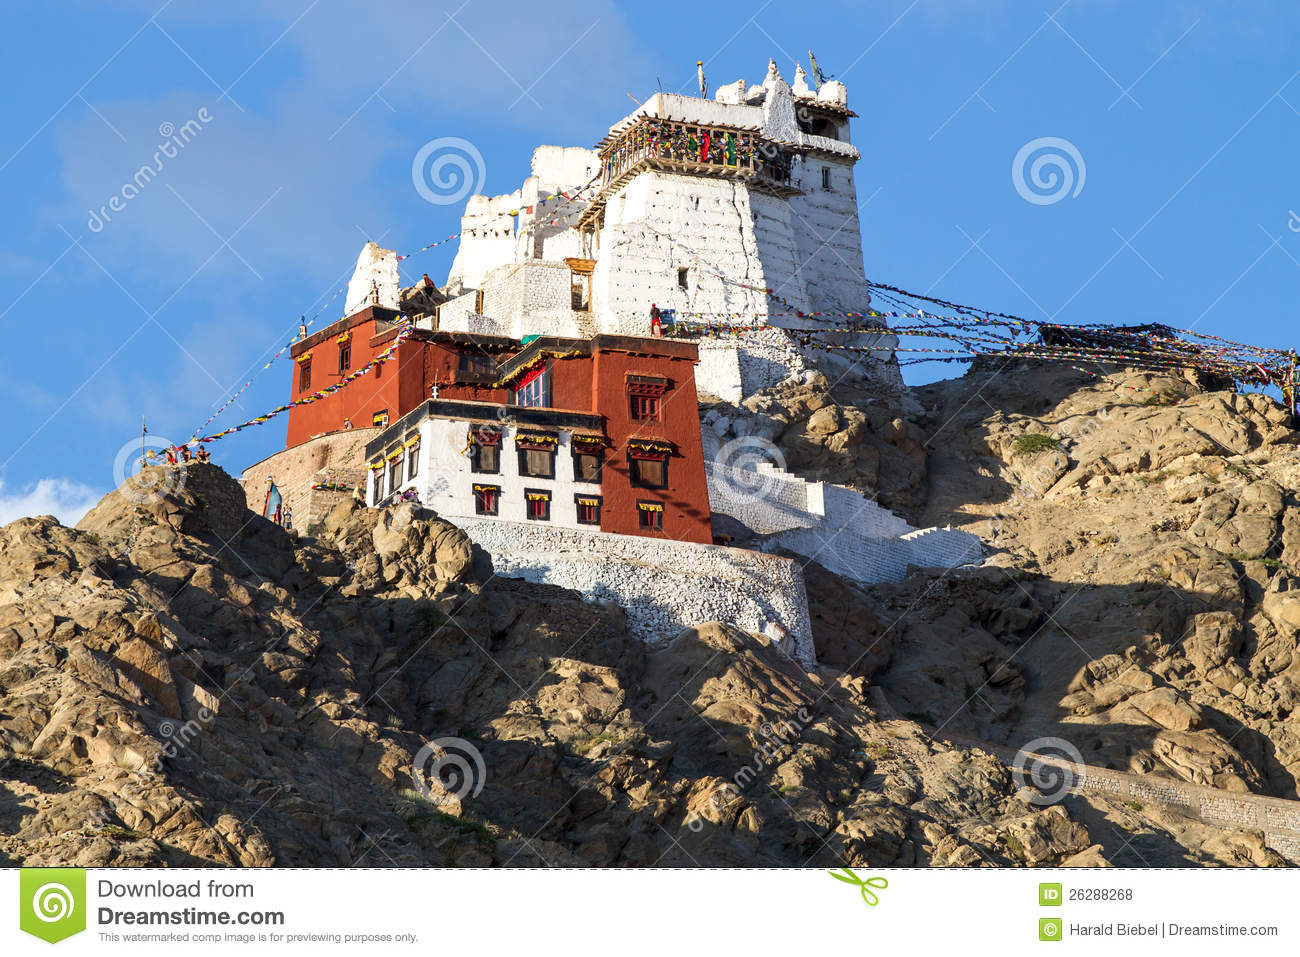 Maitreya Temple overlooking Leh-Ladakh